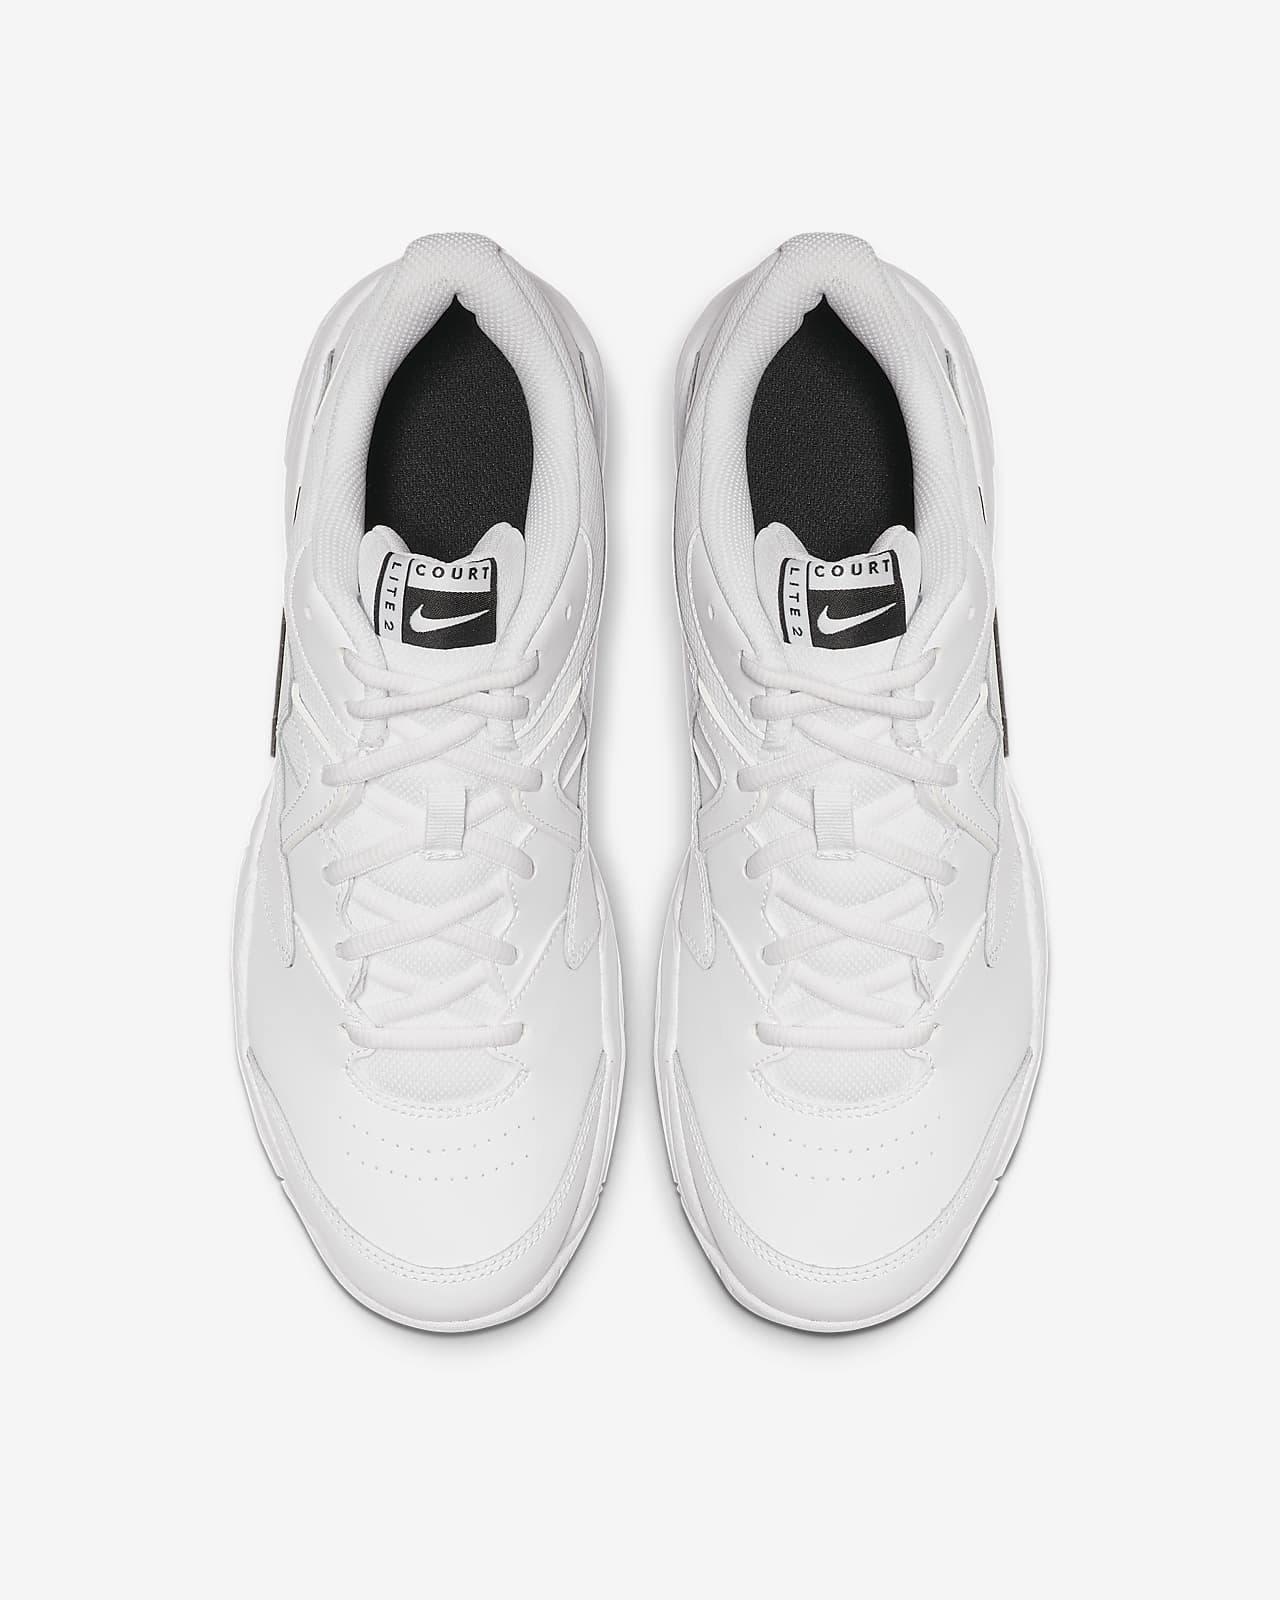 Hard Court Tennis Shoe. Nike ID